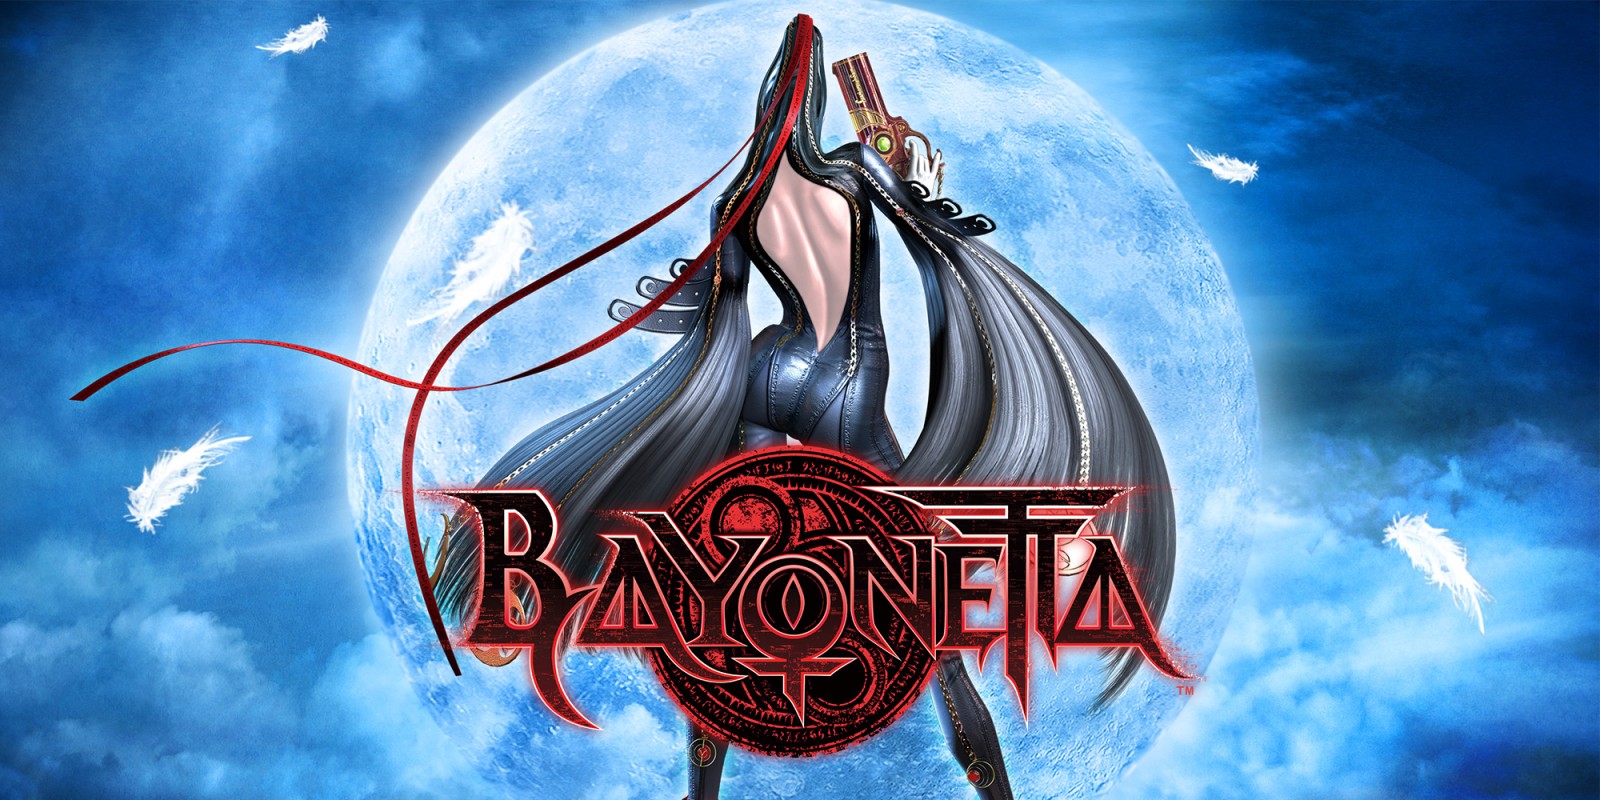 H2x1_NSwitch_Bayonetta1_image1600w.jpg